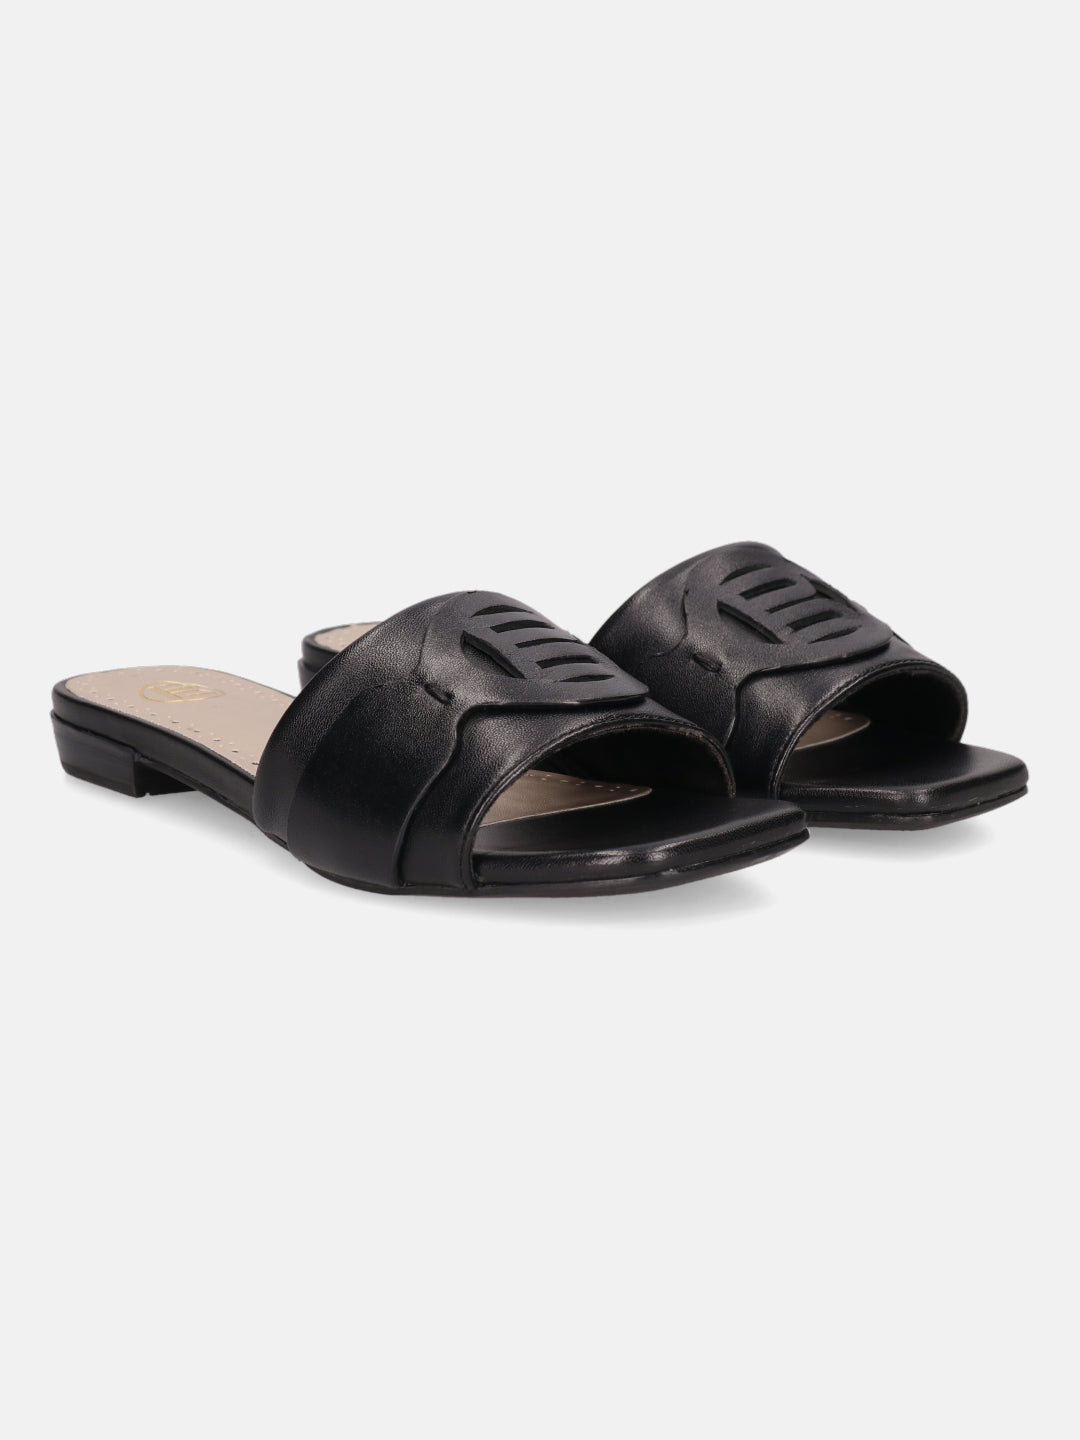 Mala Black Leather Sandals